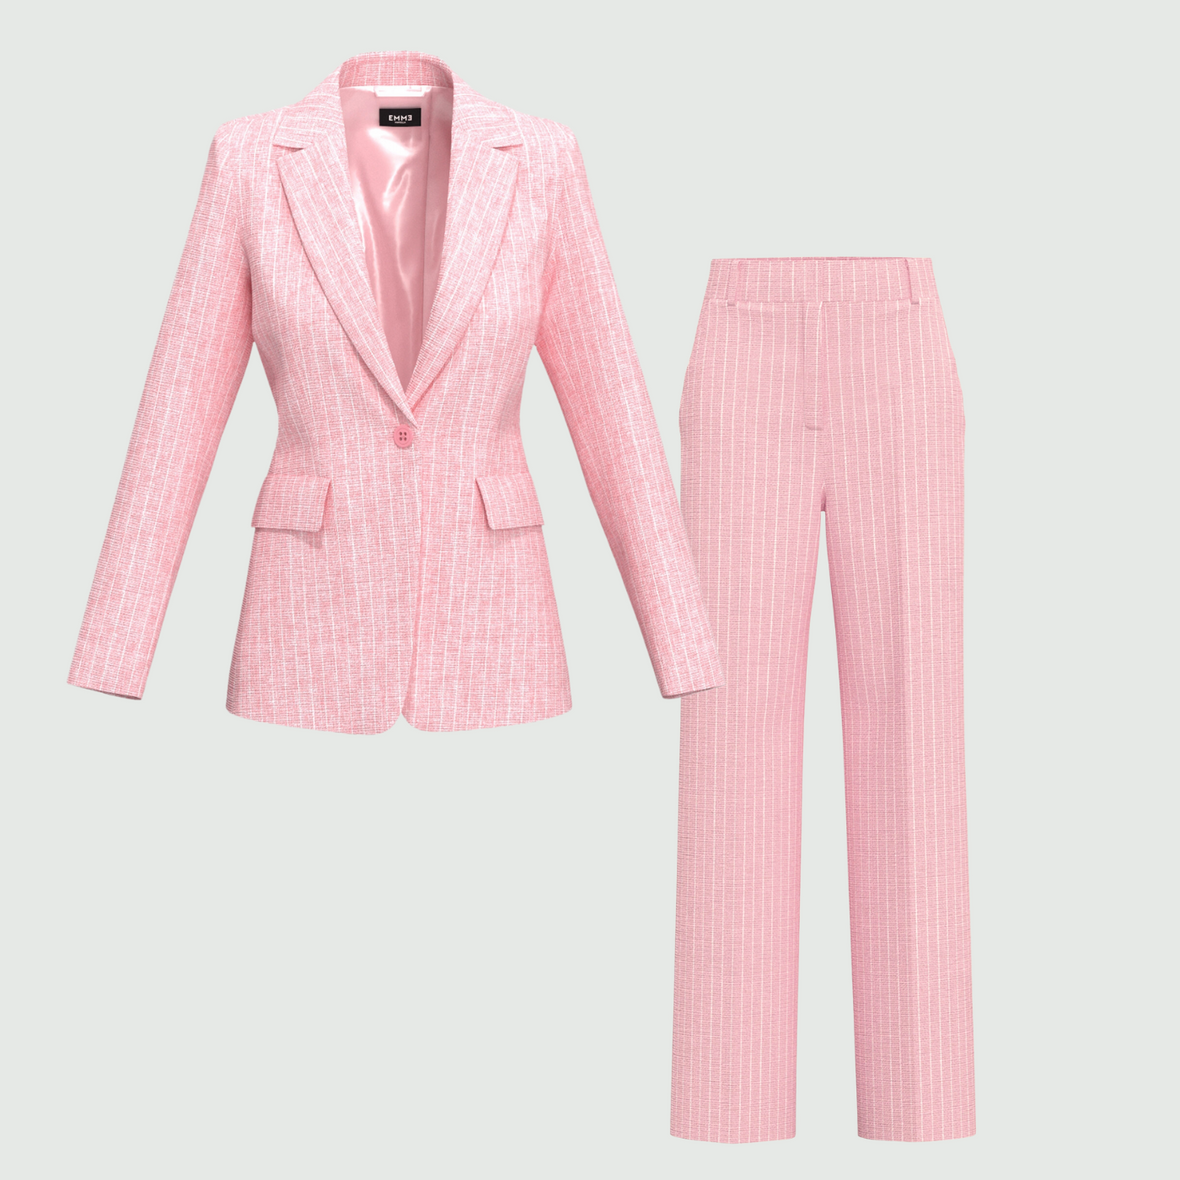 Emme Marella Pinstripe Pink Suit